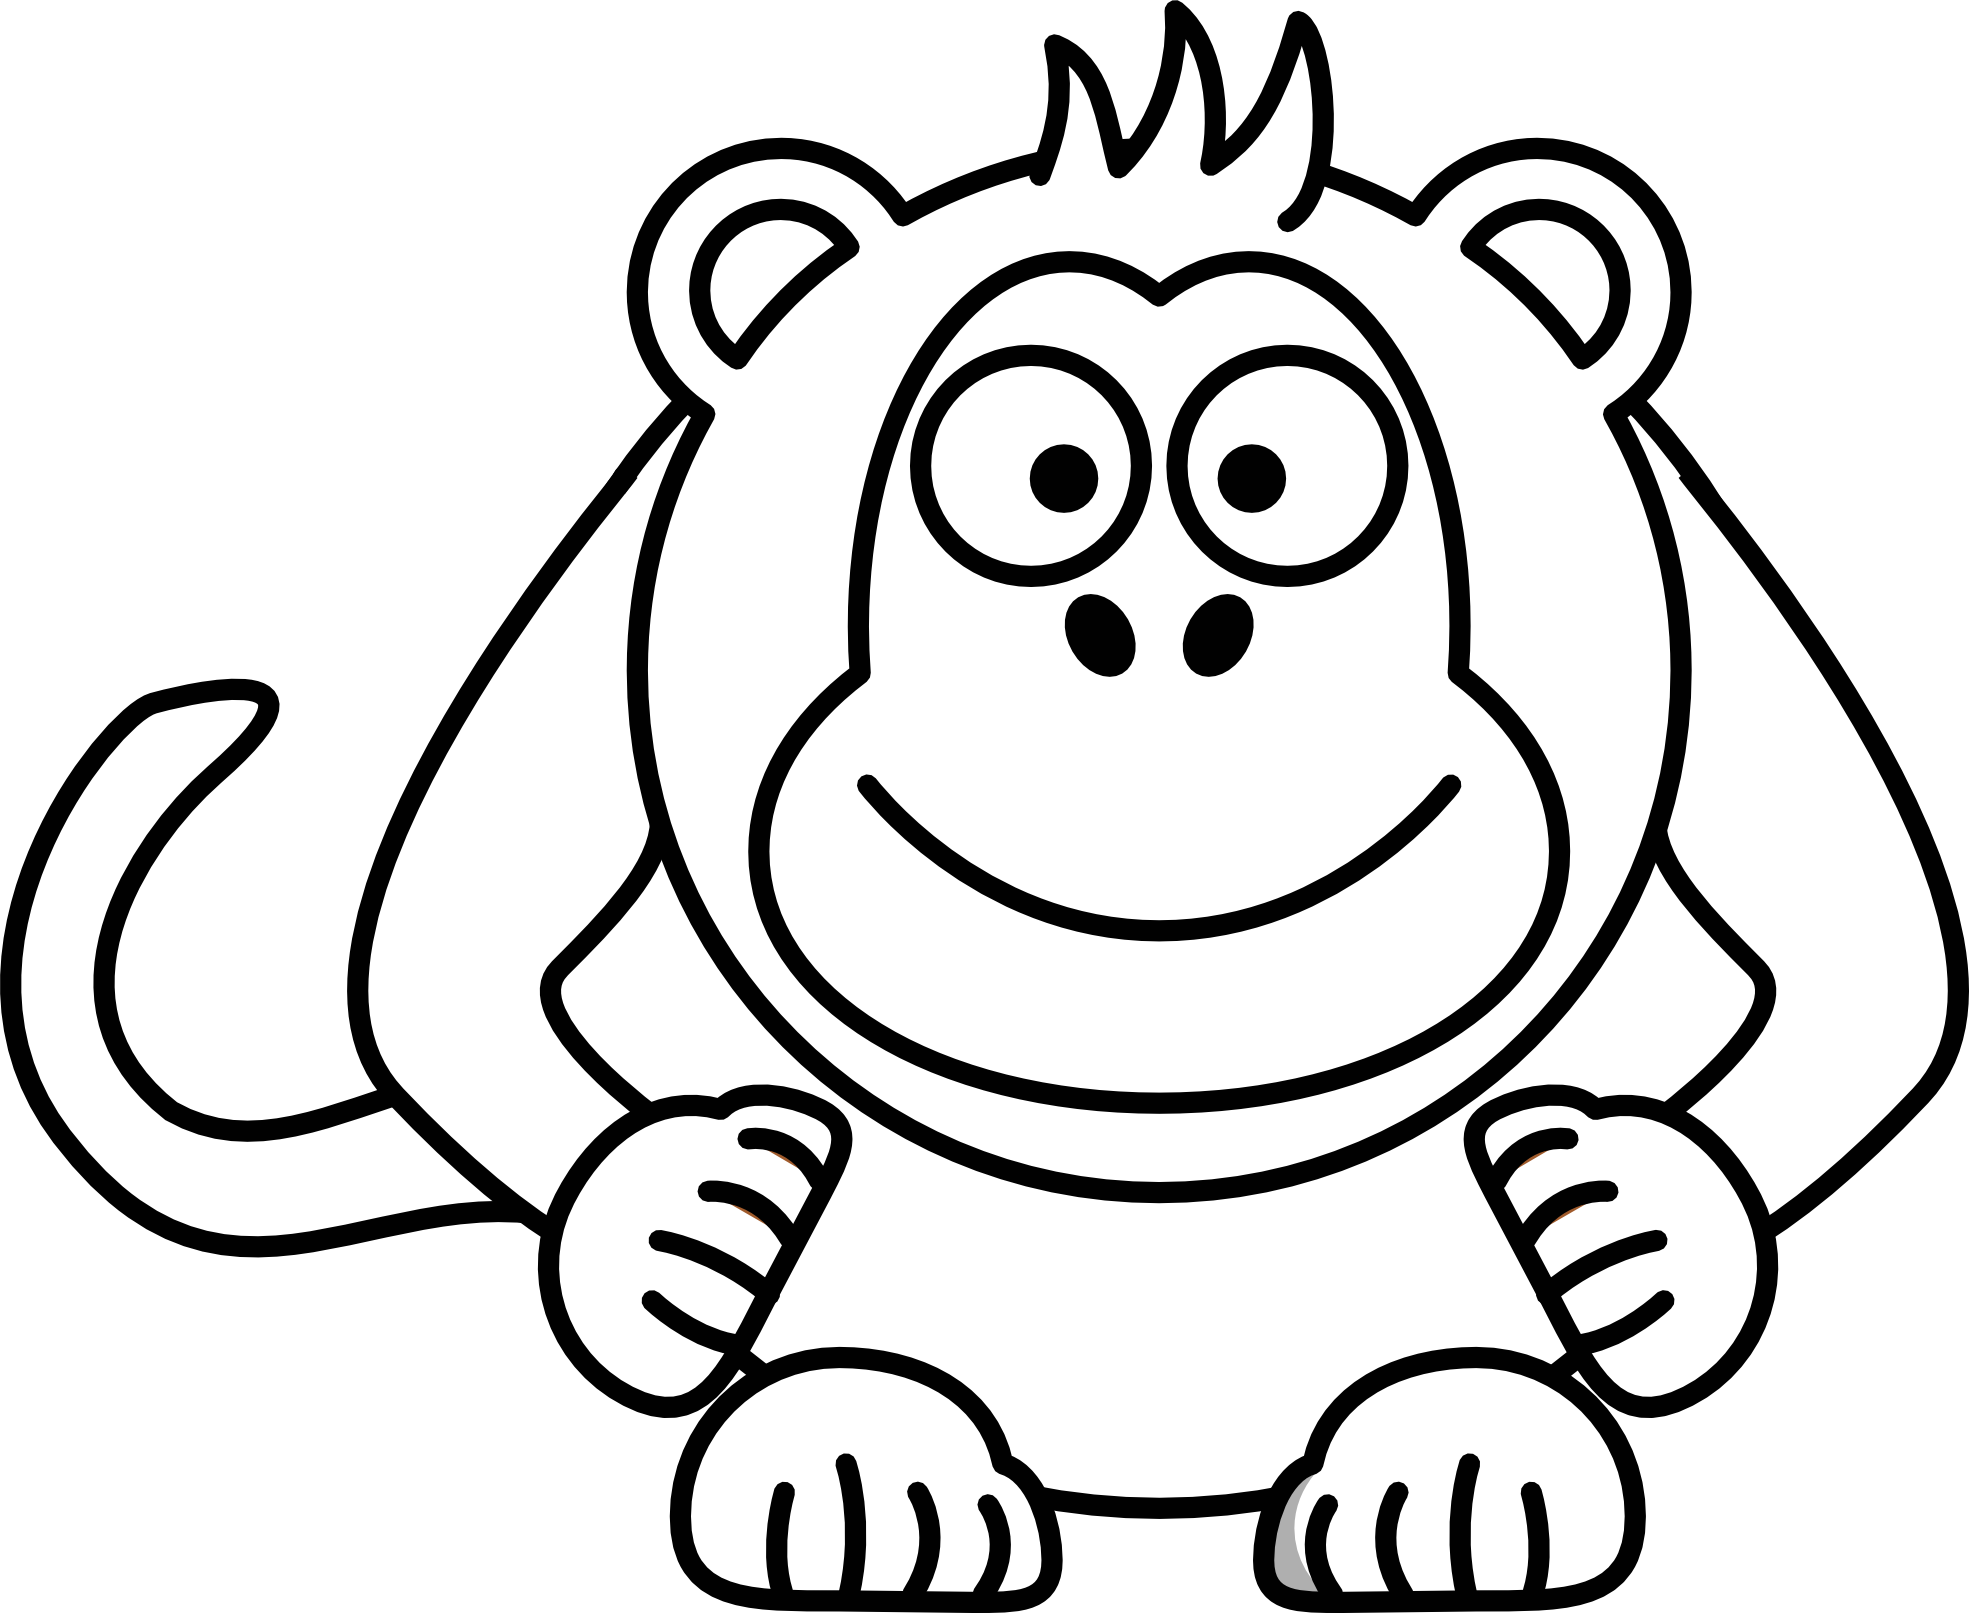 Cute Monkey Sitting On Banana Cartoon' Sticker | Spreadshirt